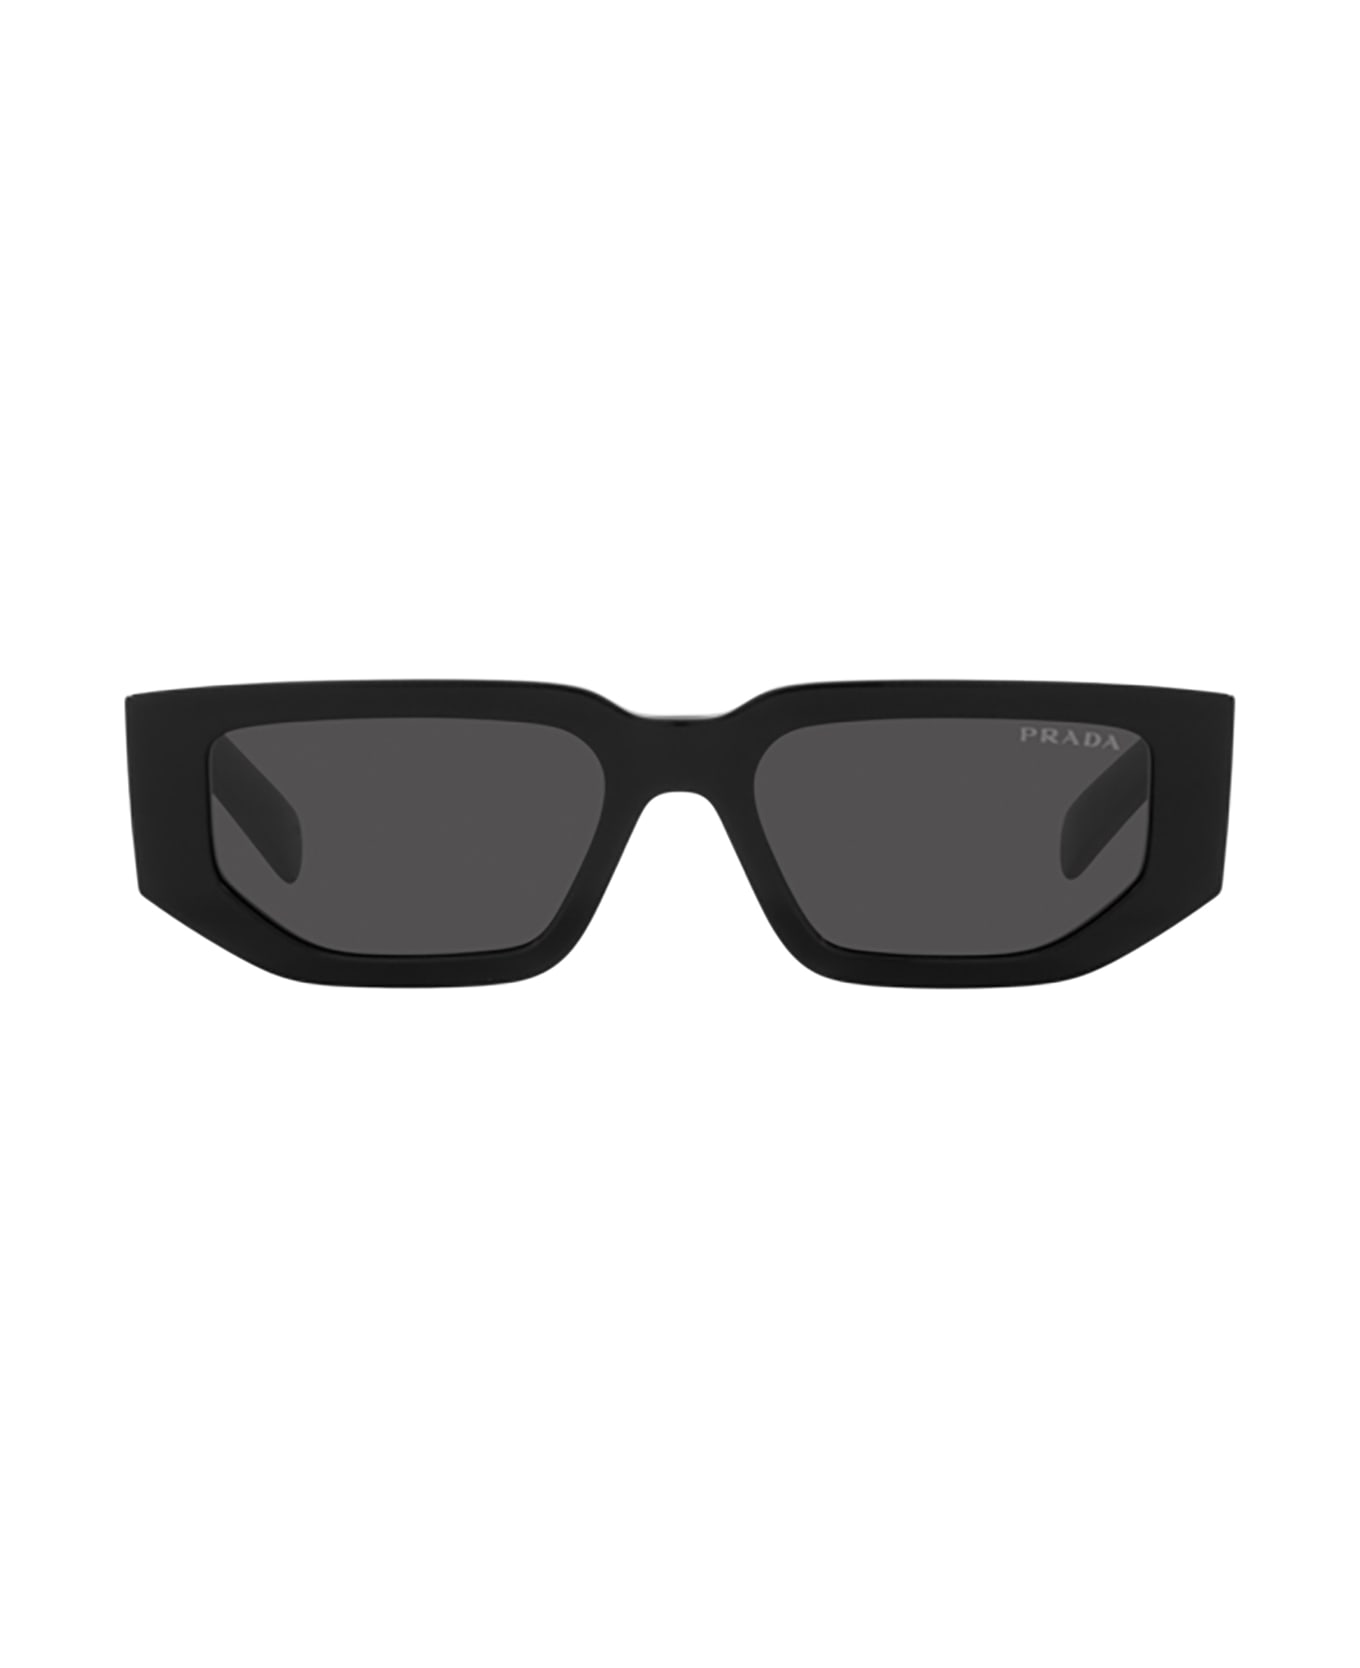 Prada Eyewear Pr 09zs Black Sunglasses - Black サングラス